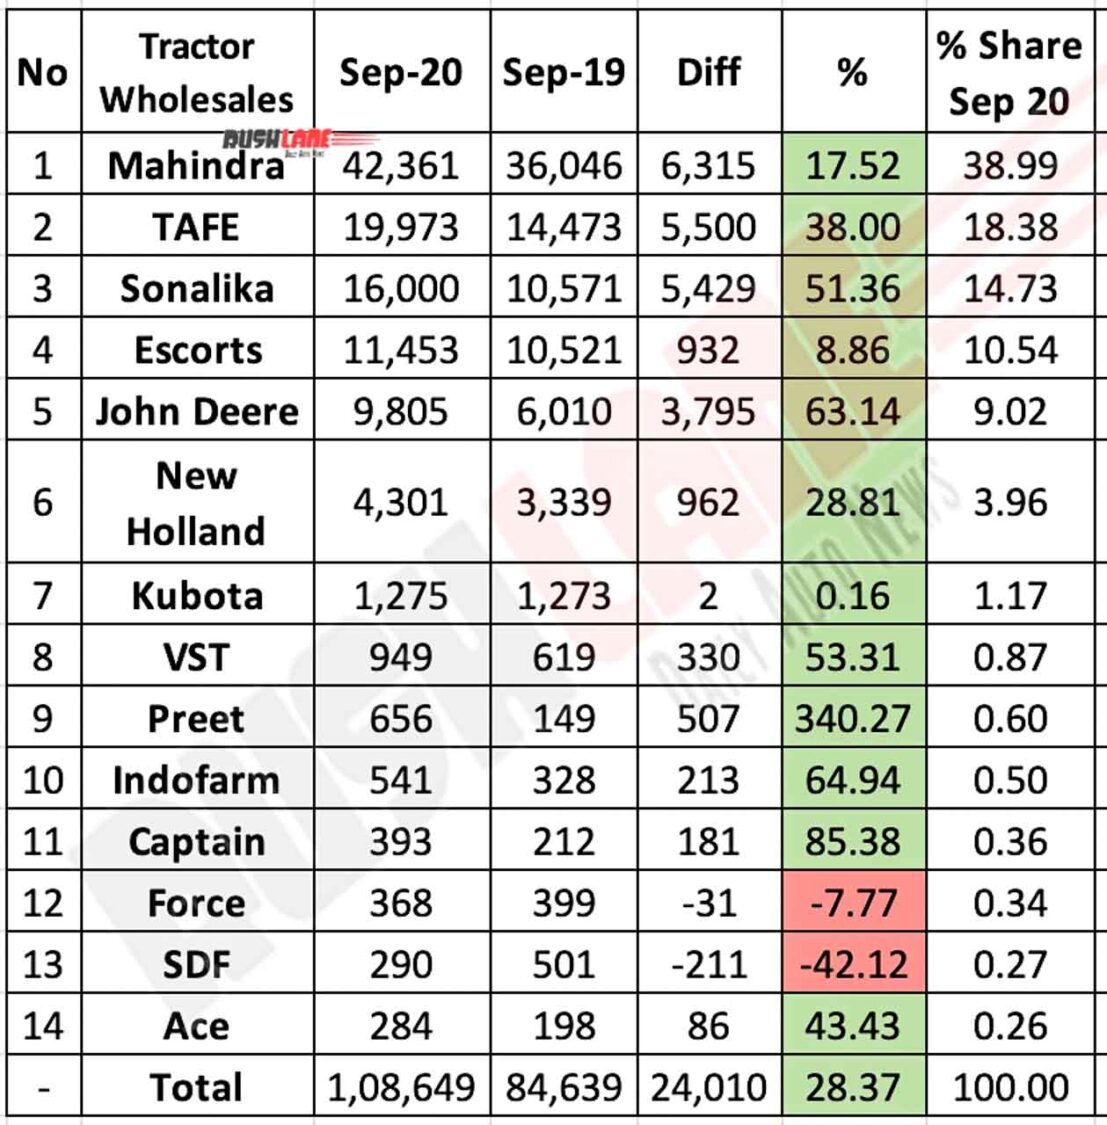 Tractor Sales Sep 2020